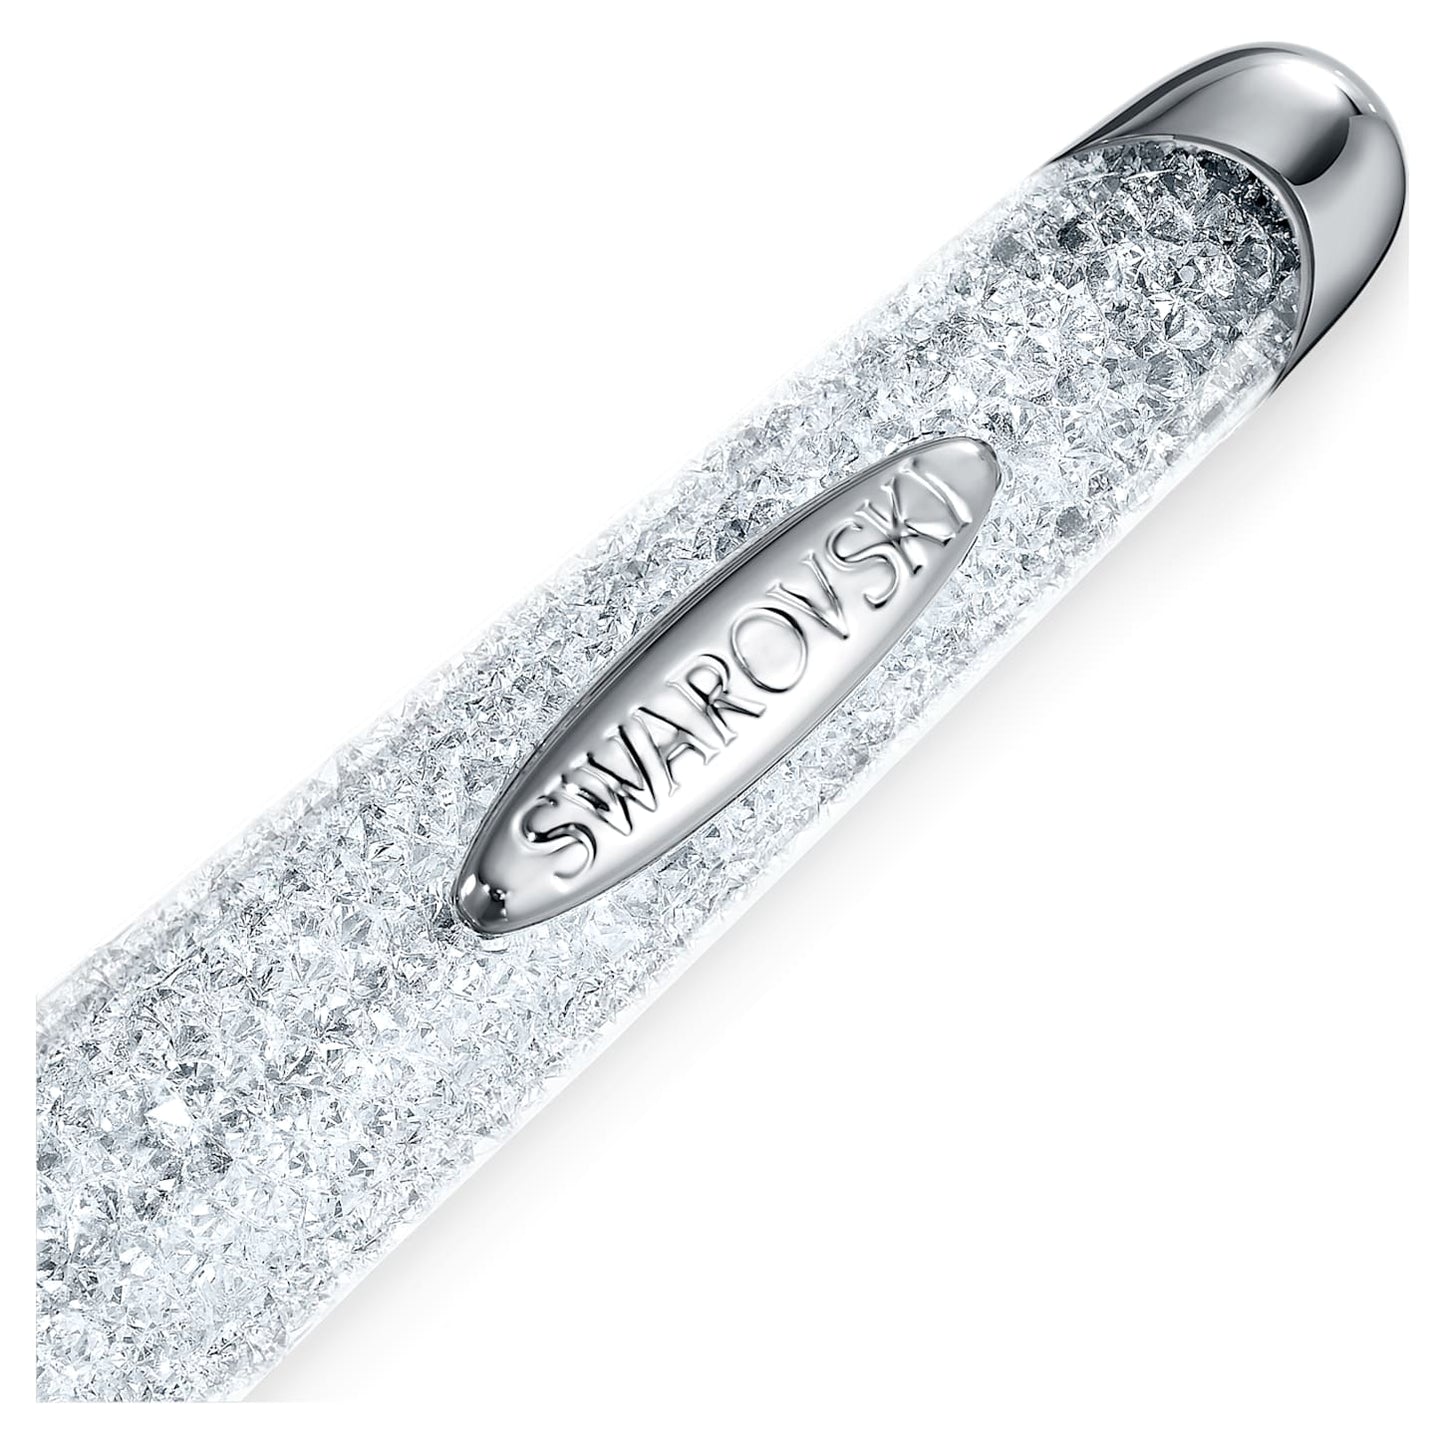 Crystalline Nova - Silver White - Ballpoint Pen - Swarovski